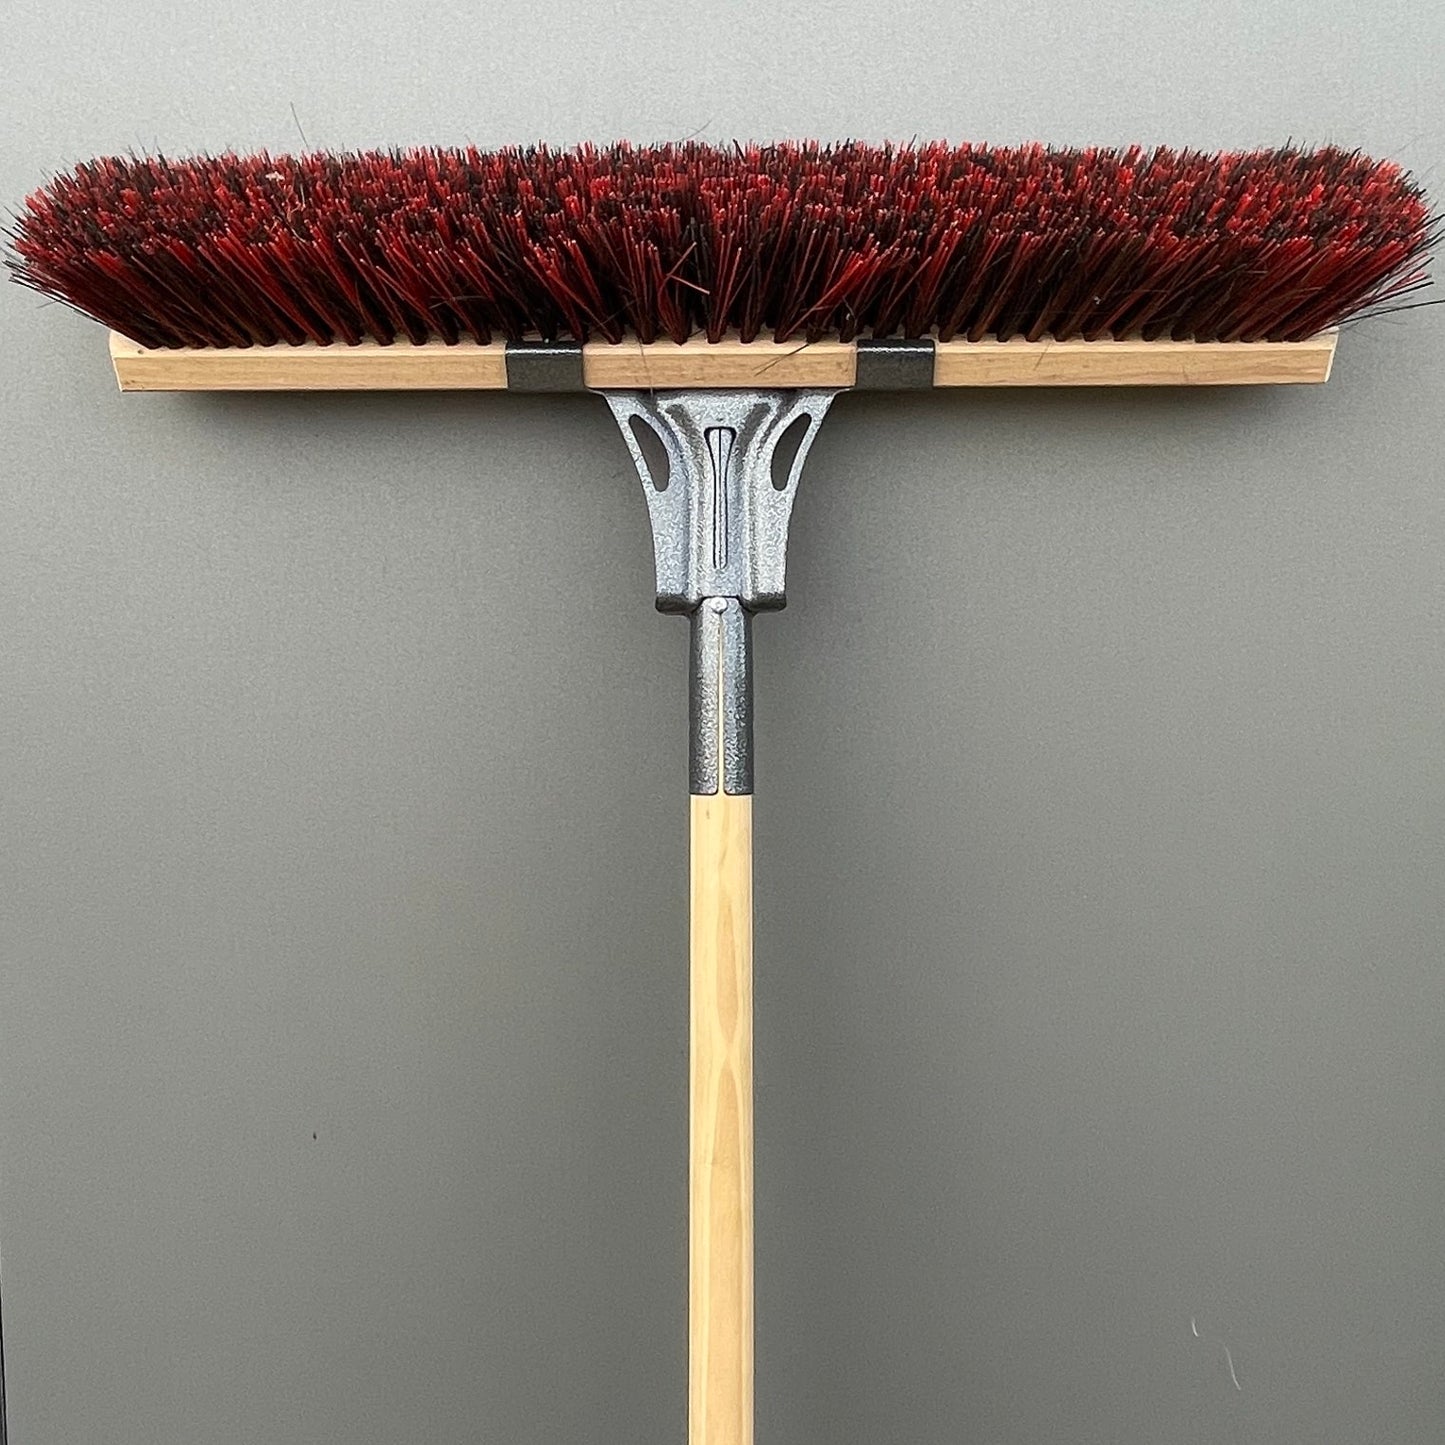 Sturdy broom